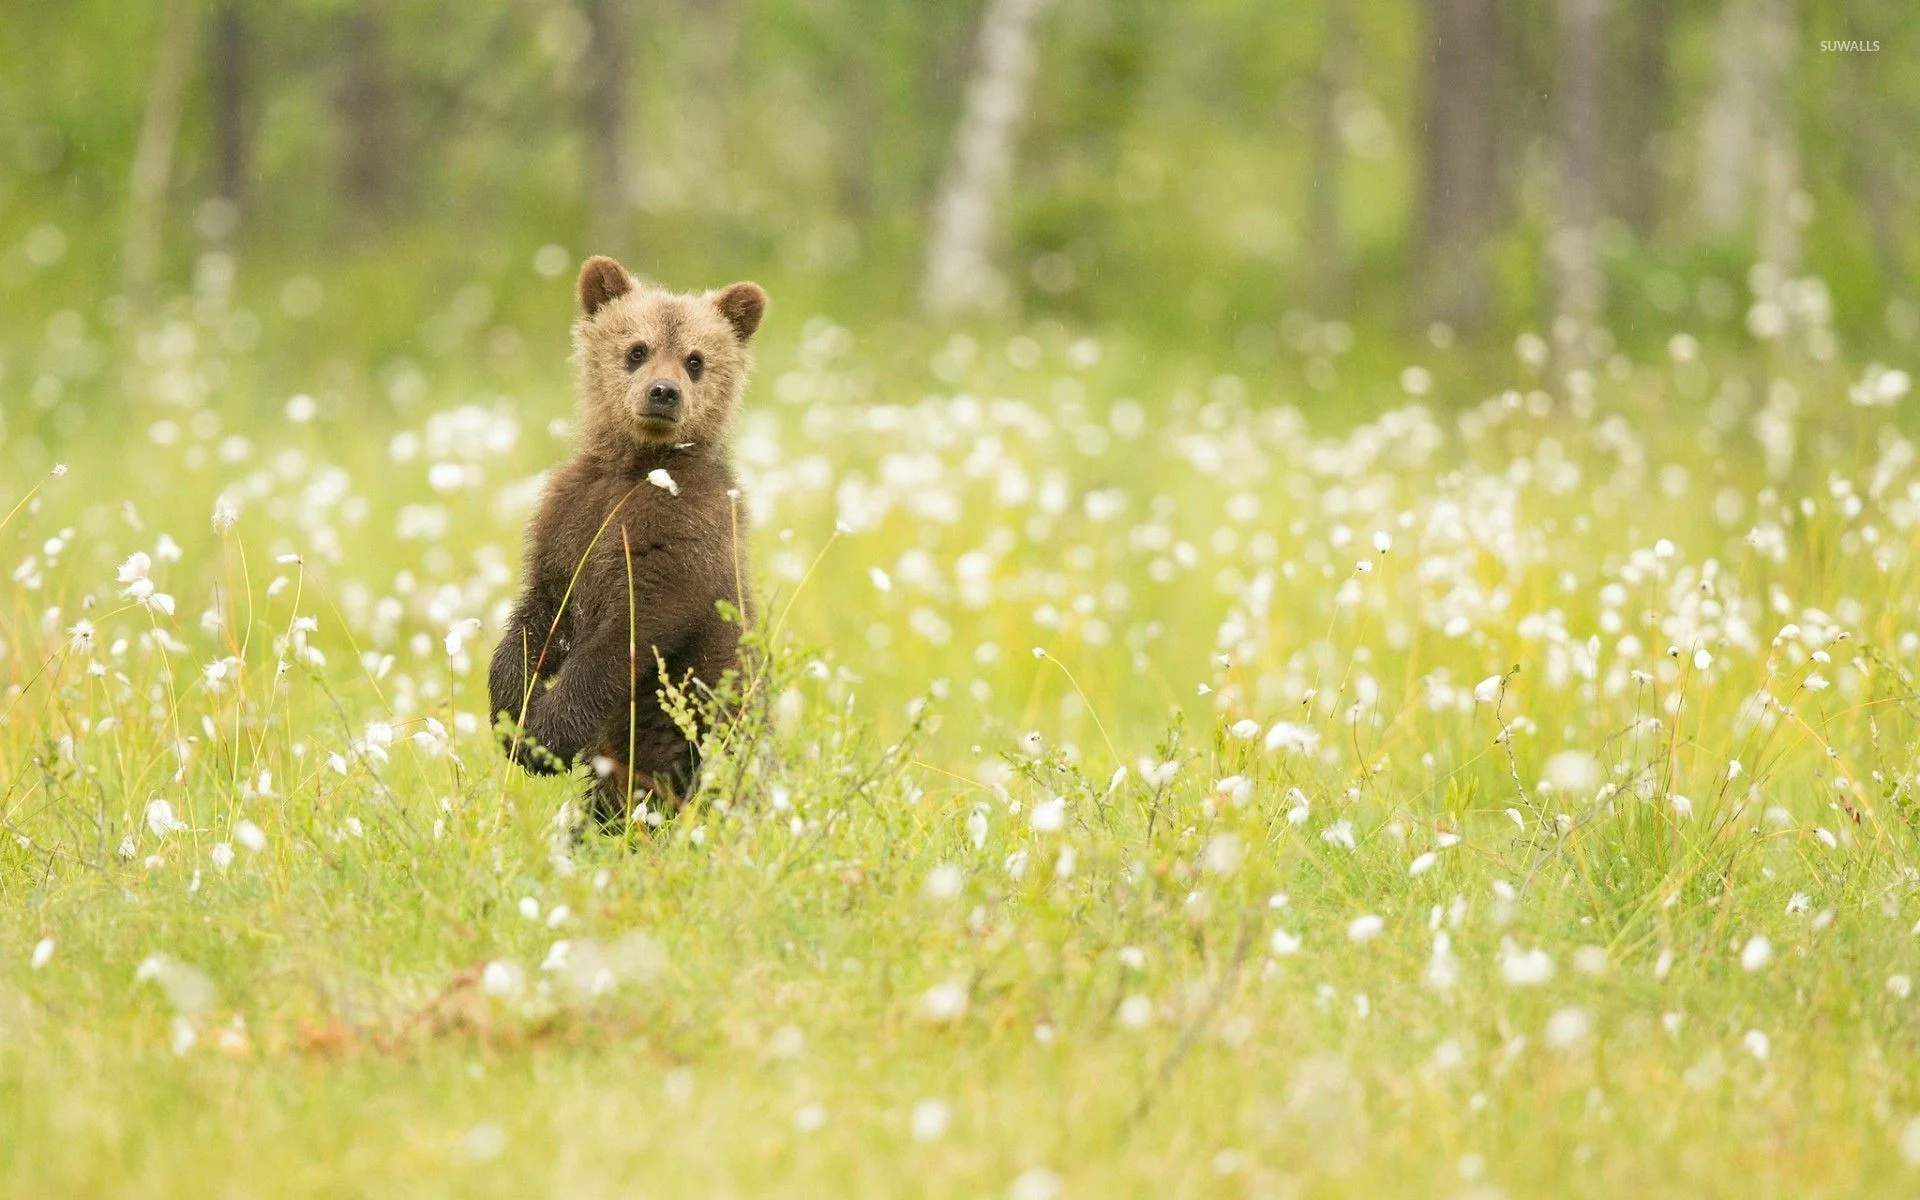 Playful bear cubs, Nature's innocence, Cute wildlife, Captivating expressions, 1920x1200 HD Desktop